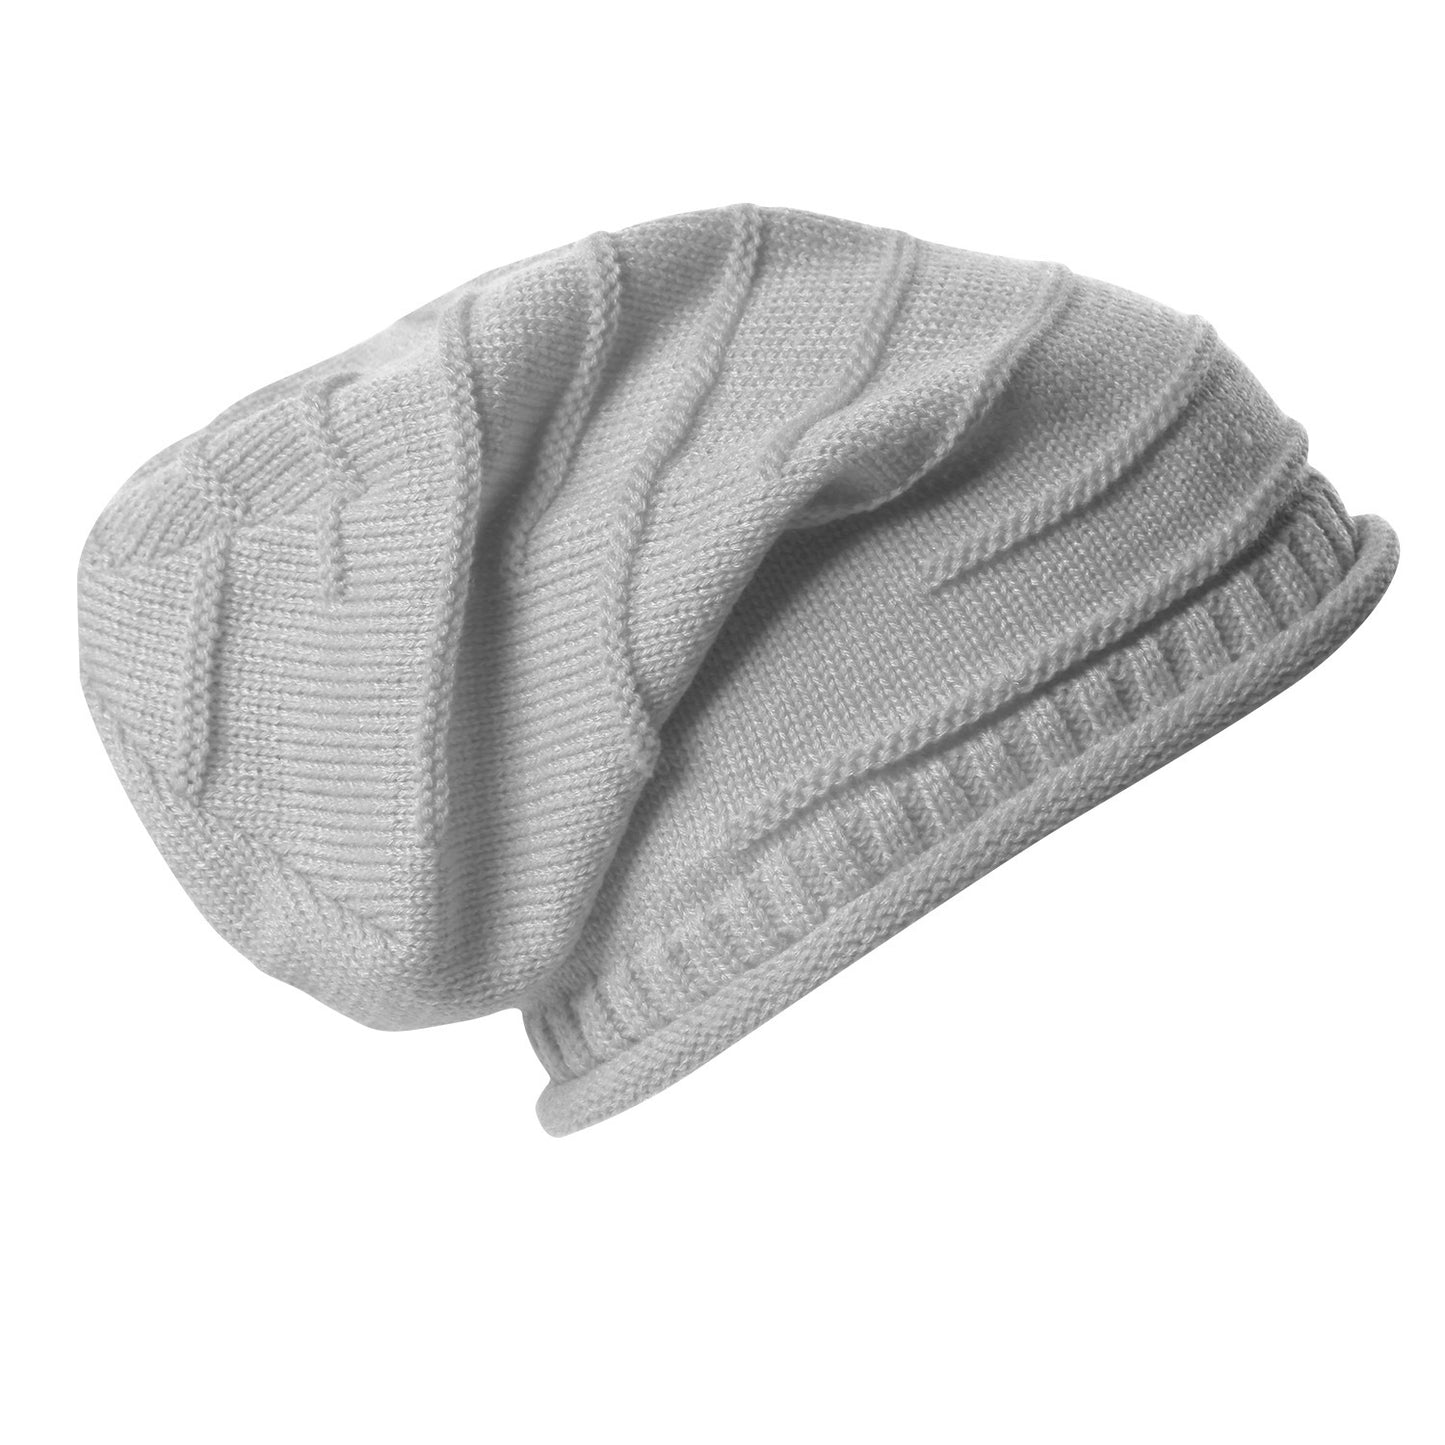 Unisex Knit Beanie Hat Winter Warm Hat Slouchy Baggy Hats Skull Cap 5 Colors